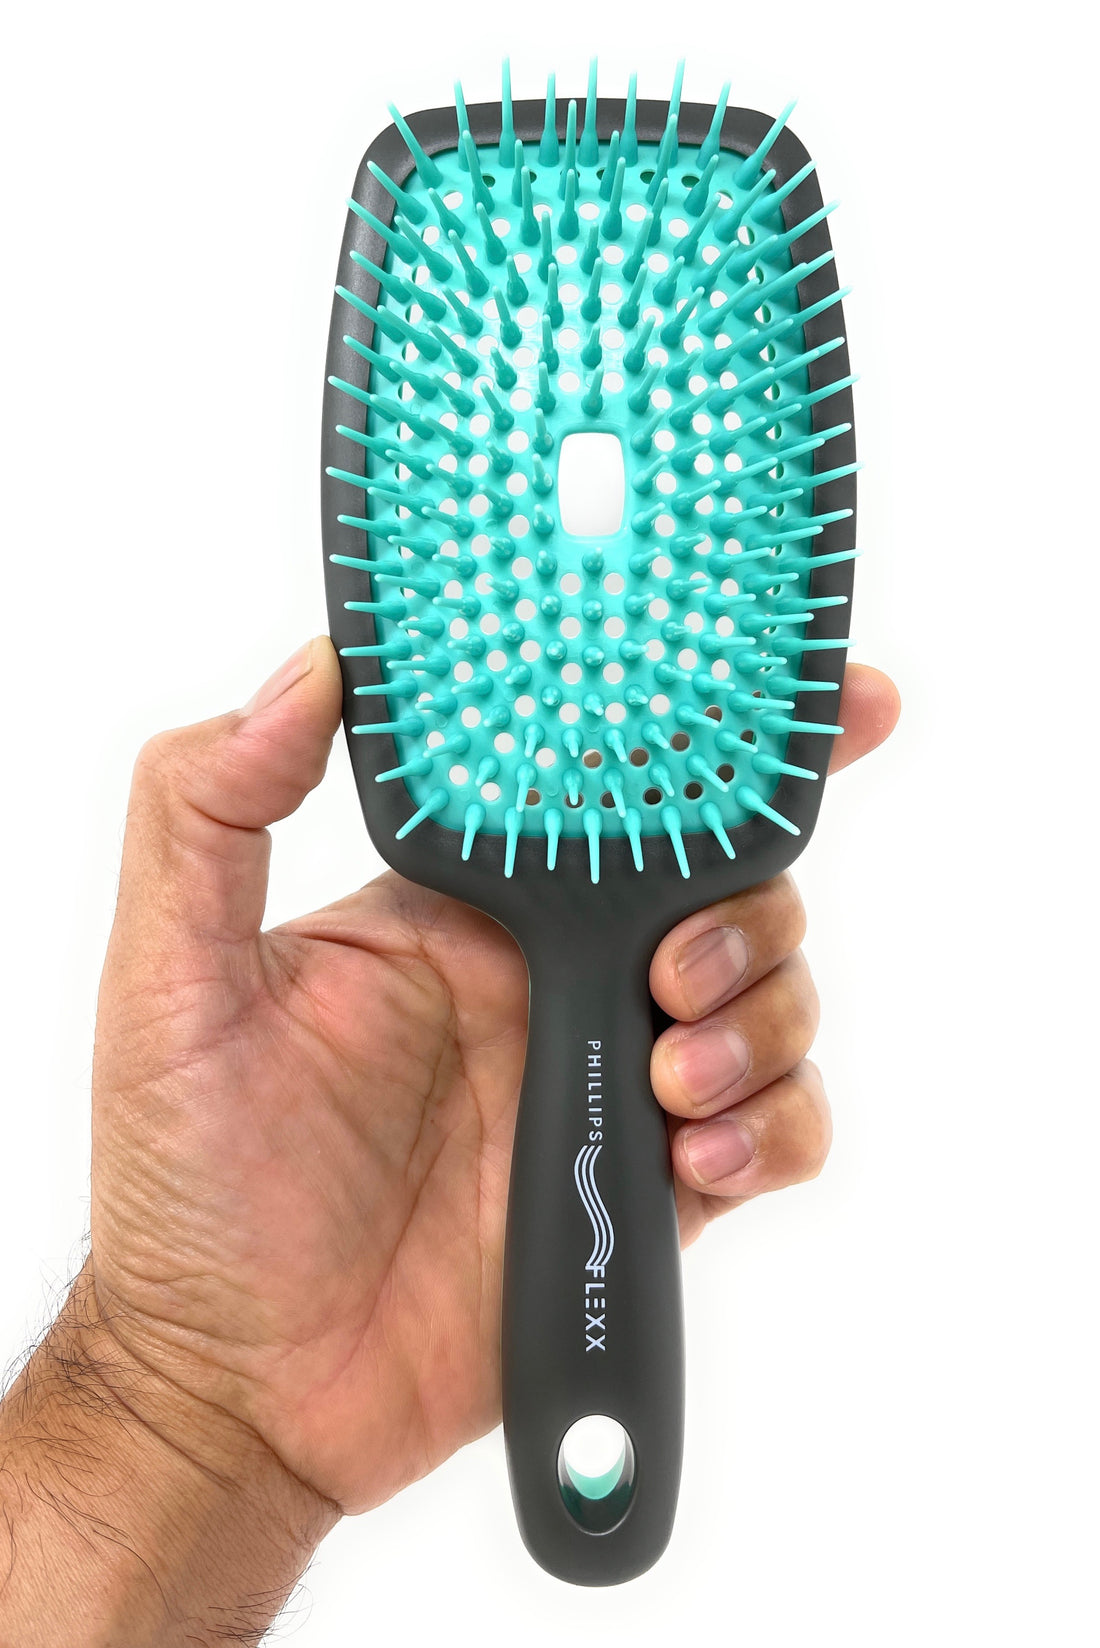 Is Phillips Brush Flexx Vented Cushion Hair Blow Drying Hair Brush Detangles The Best for Blowdries?